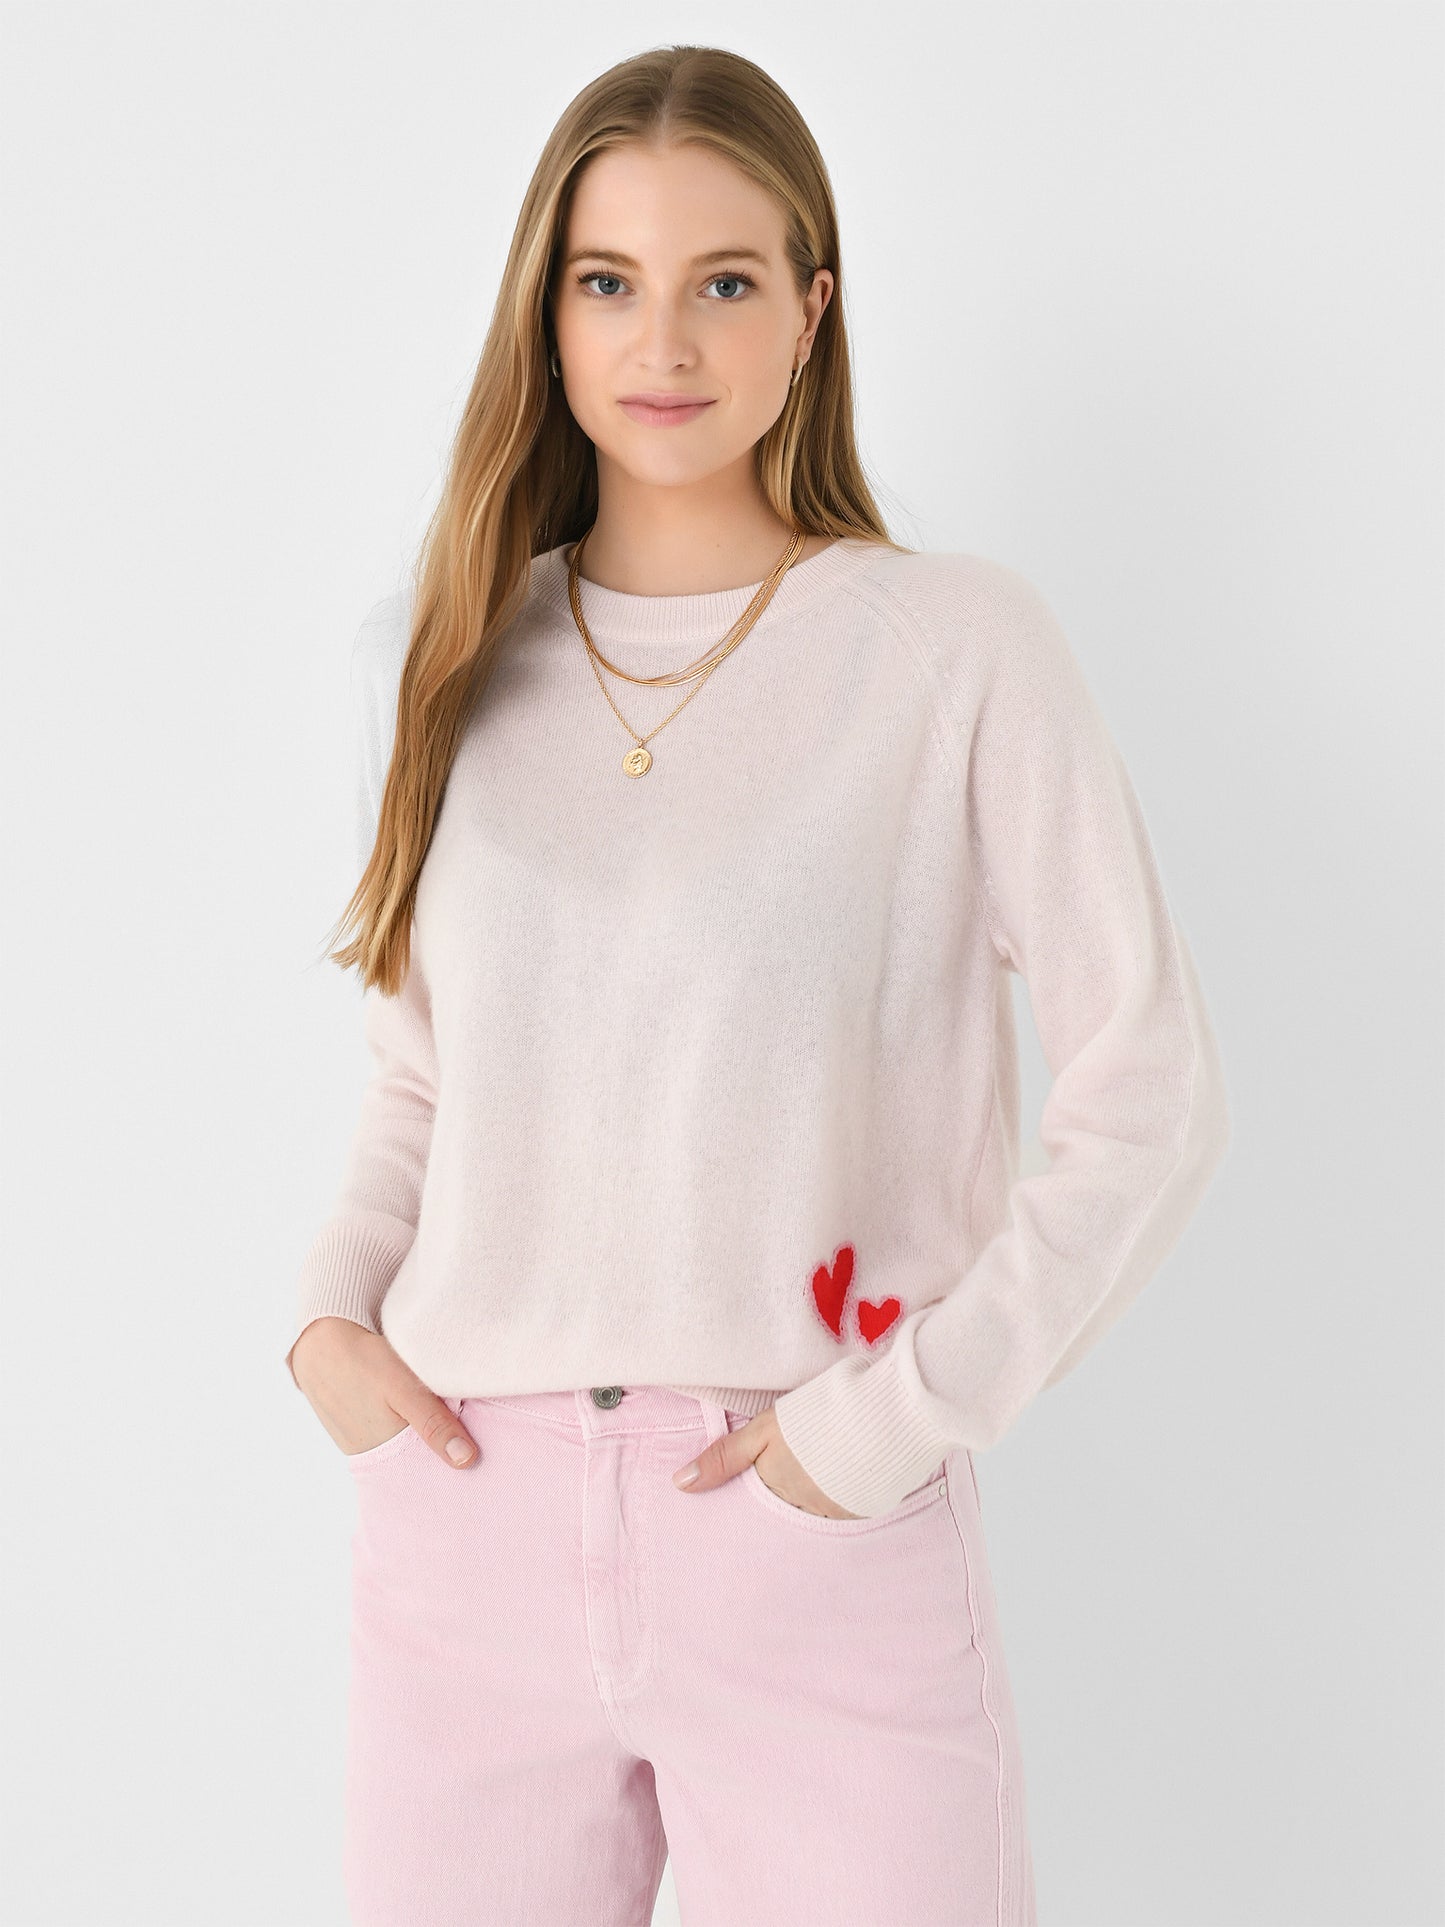 White + Warren Women's Cashmere Embroidered Heart Sweater